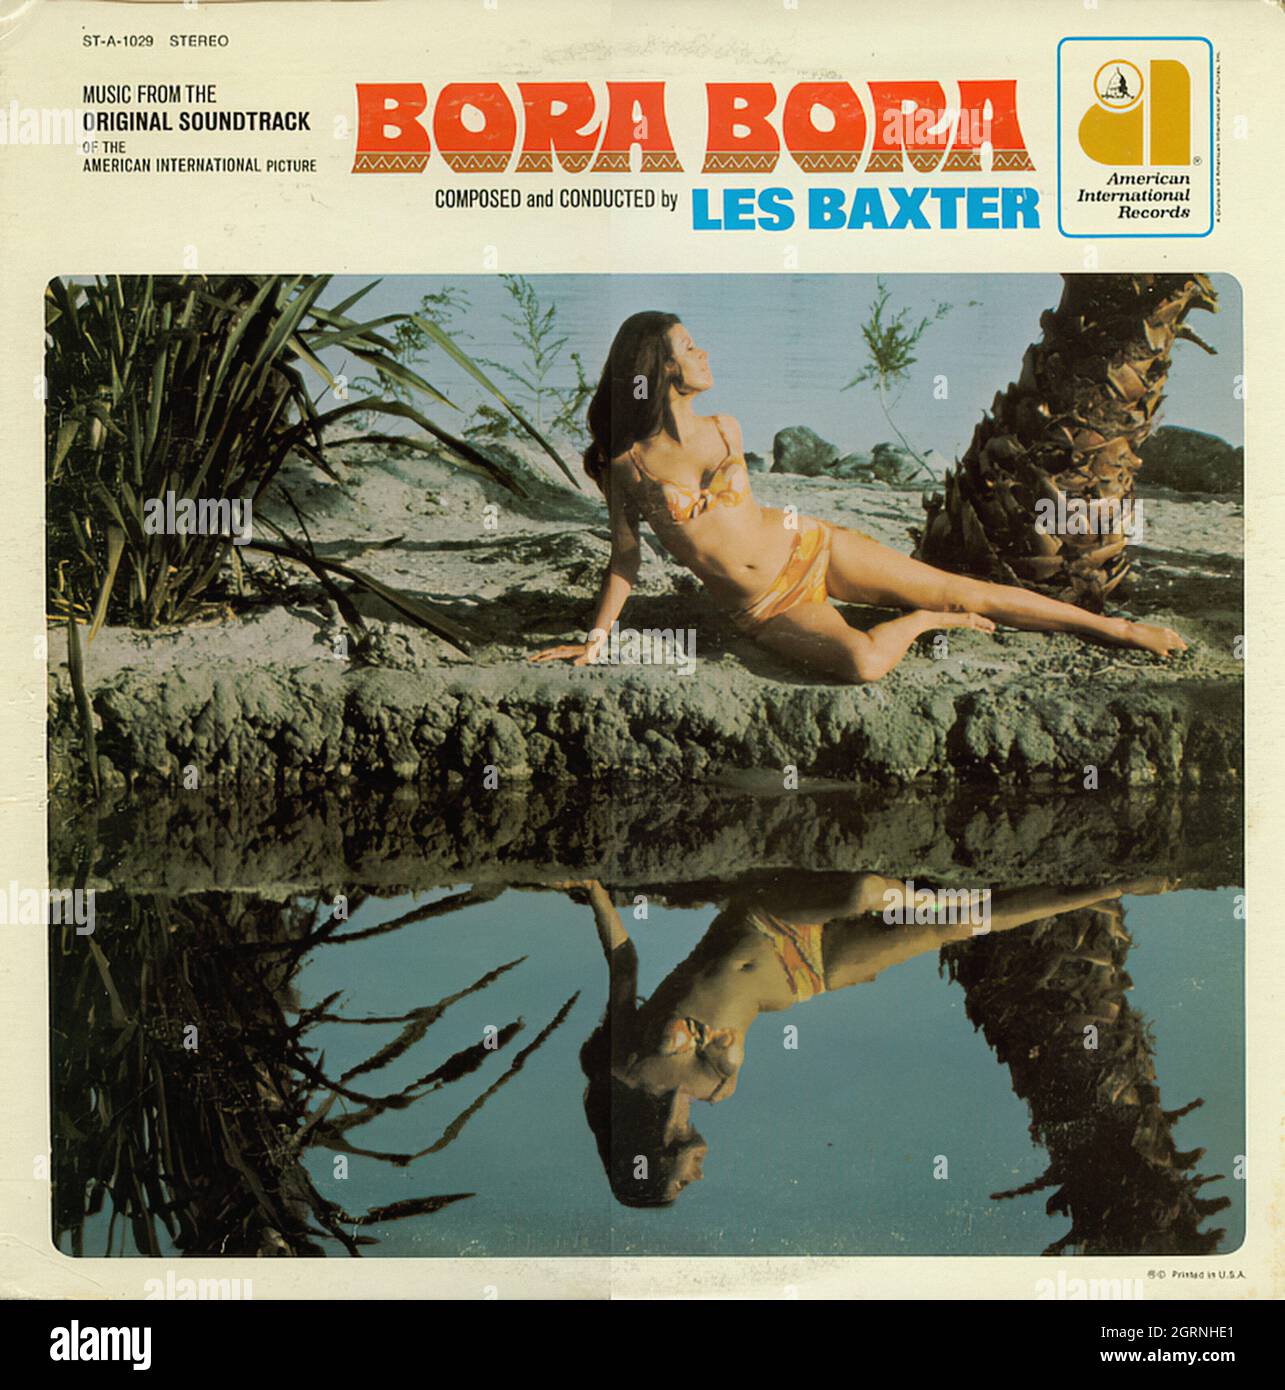 Les Baxter  Bora Bora - Vintage Soundtrack Vinyl Album Stock Photo